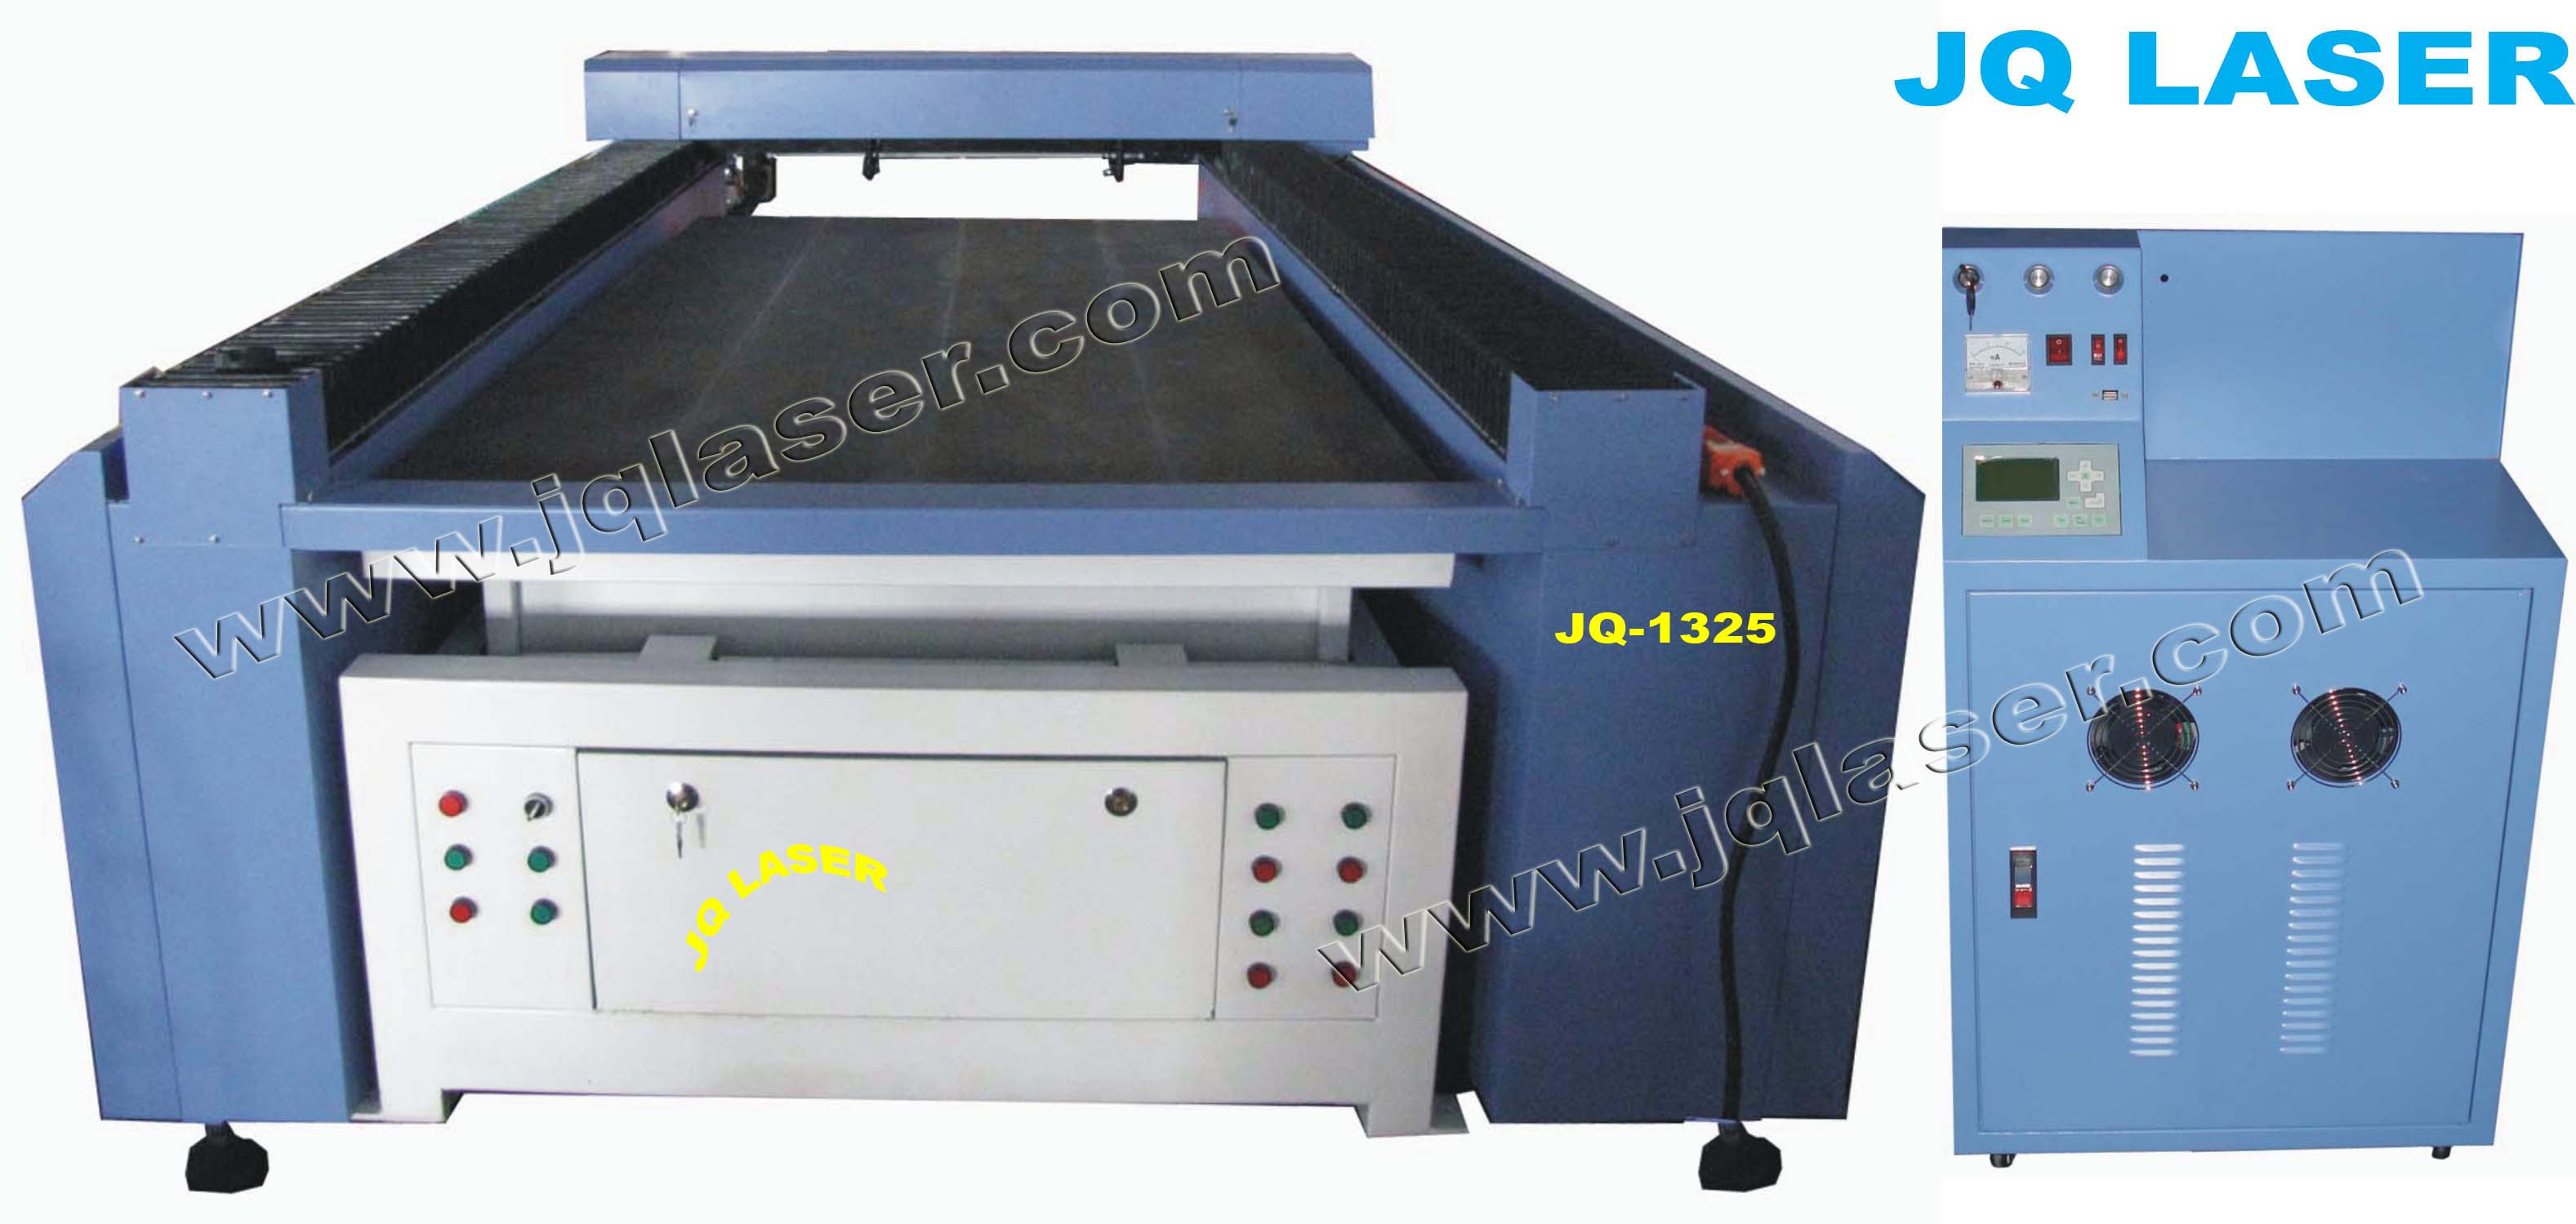 JQ-1325 marble/granite/headstone/tombstone laser engraving machine parameter